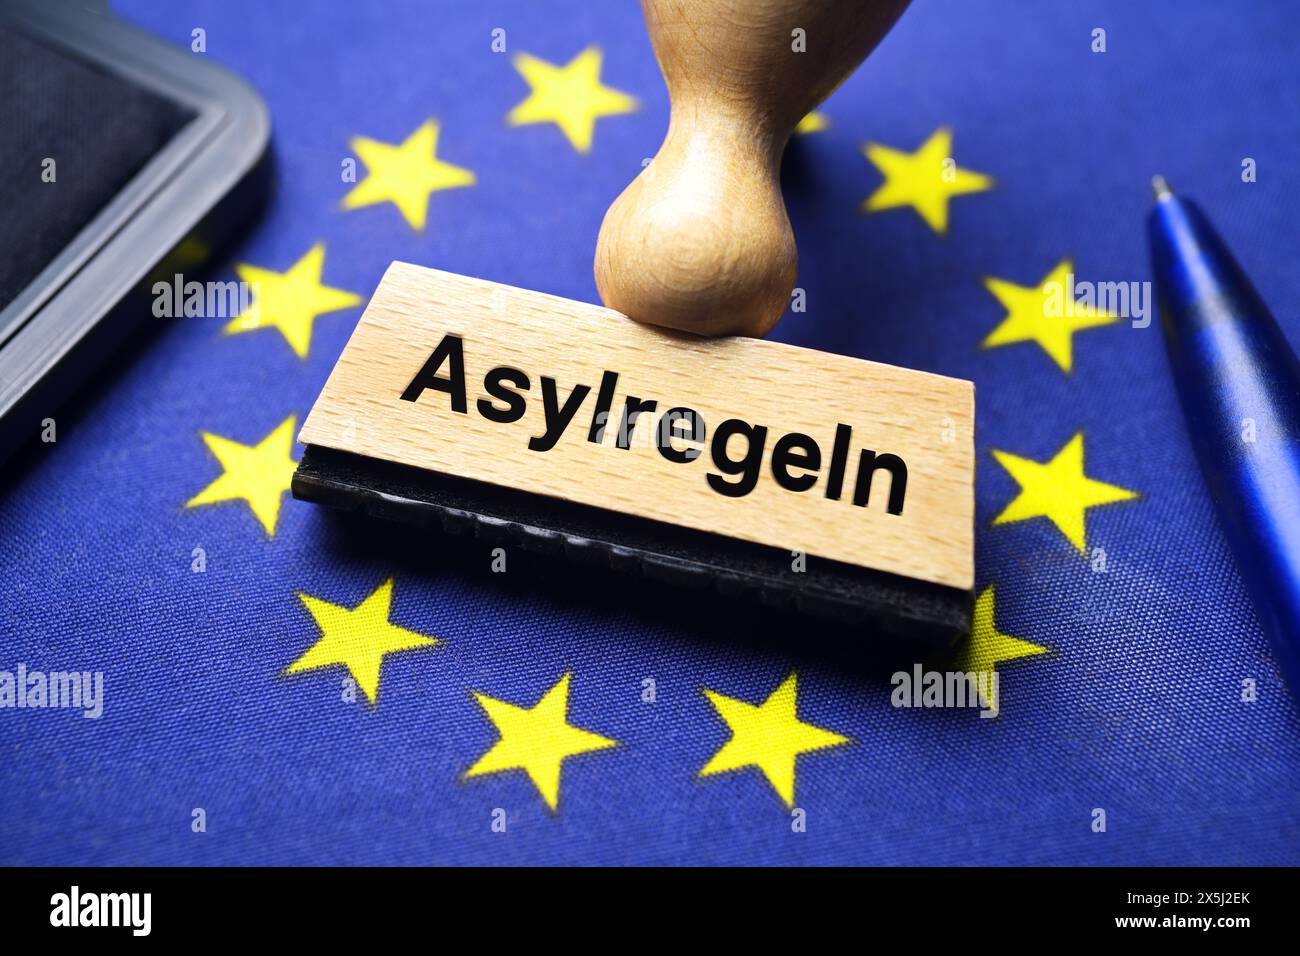 FOTOMONTAGE, Stempel mit Aufschrift Asylregeln auf EU-Fahne, EU-Asylpakt Foto Stock